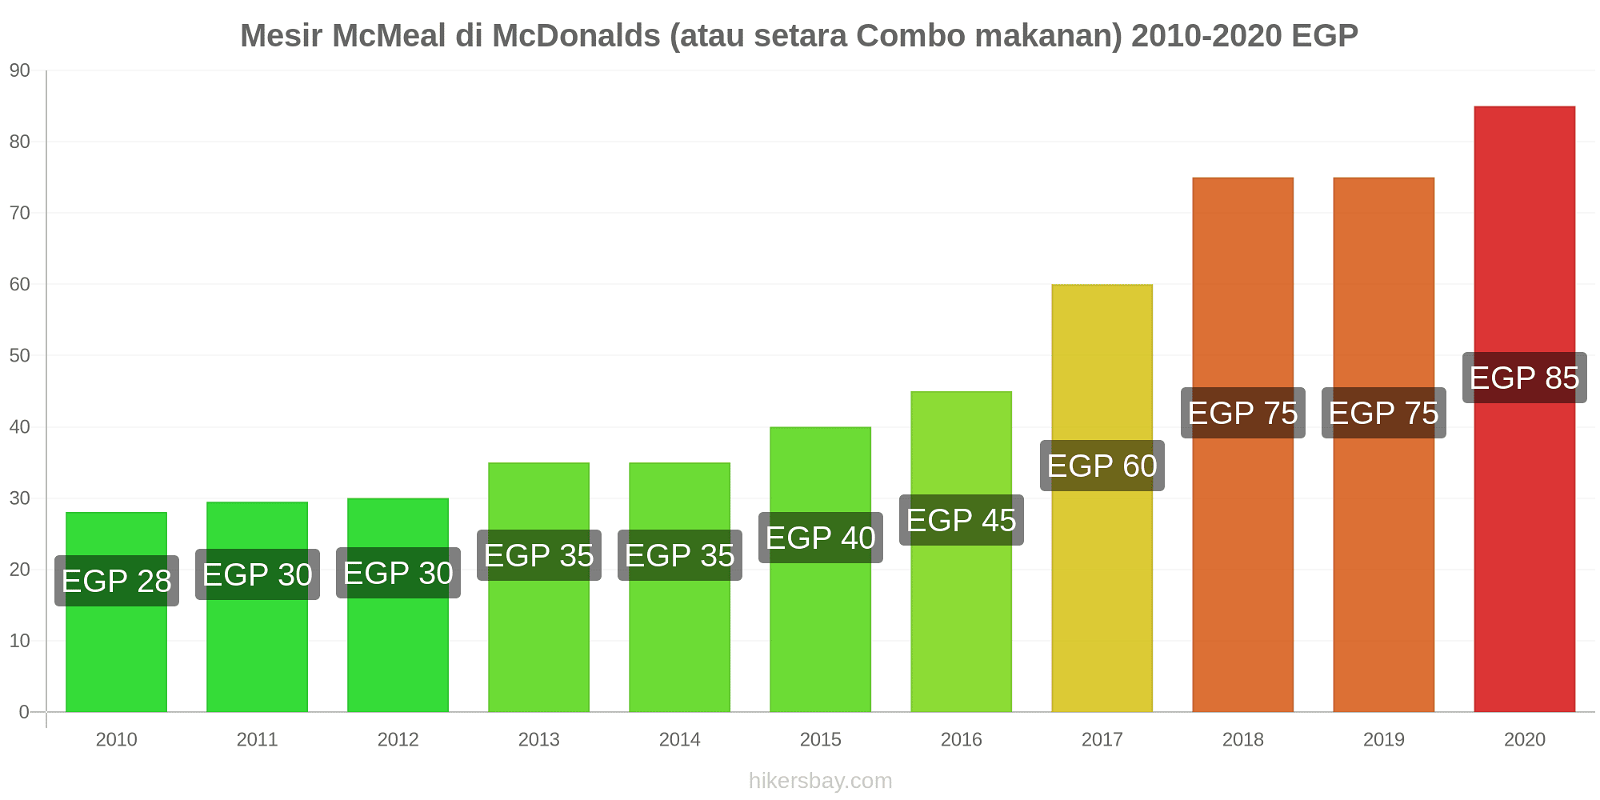 Mesir perubahan harga McMeal di McDonalds (atau setara Combo makanan) hikersbay.com